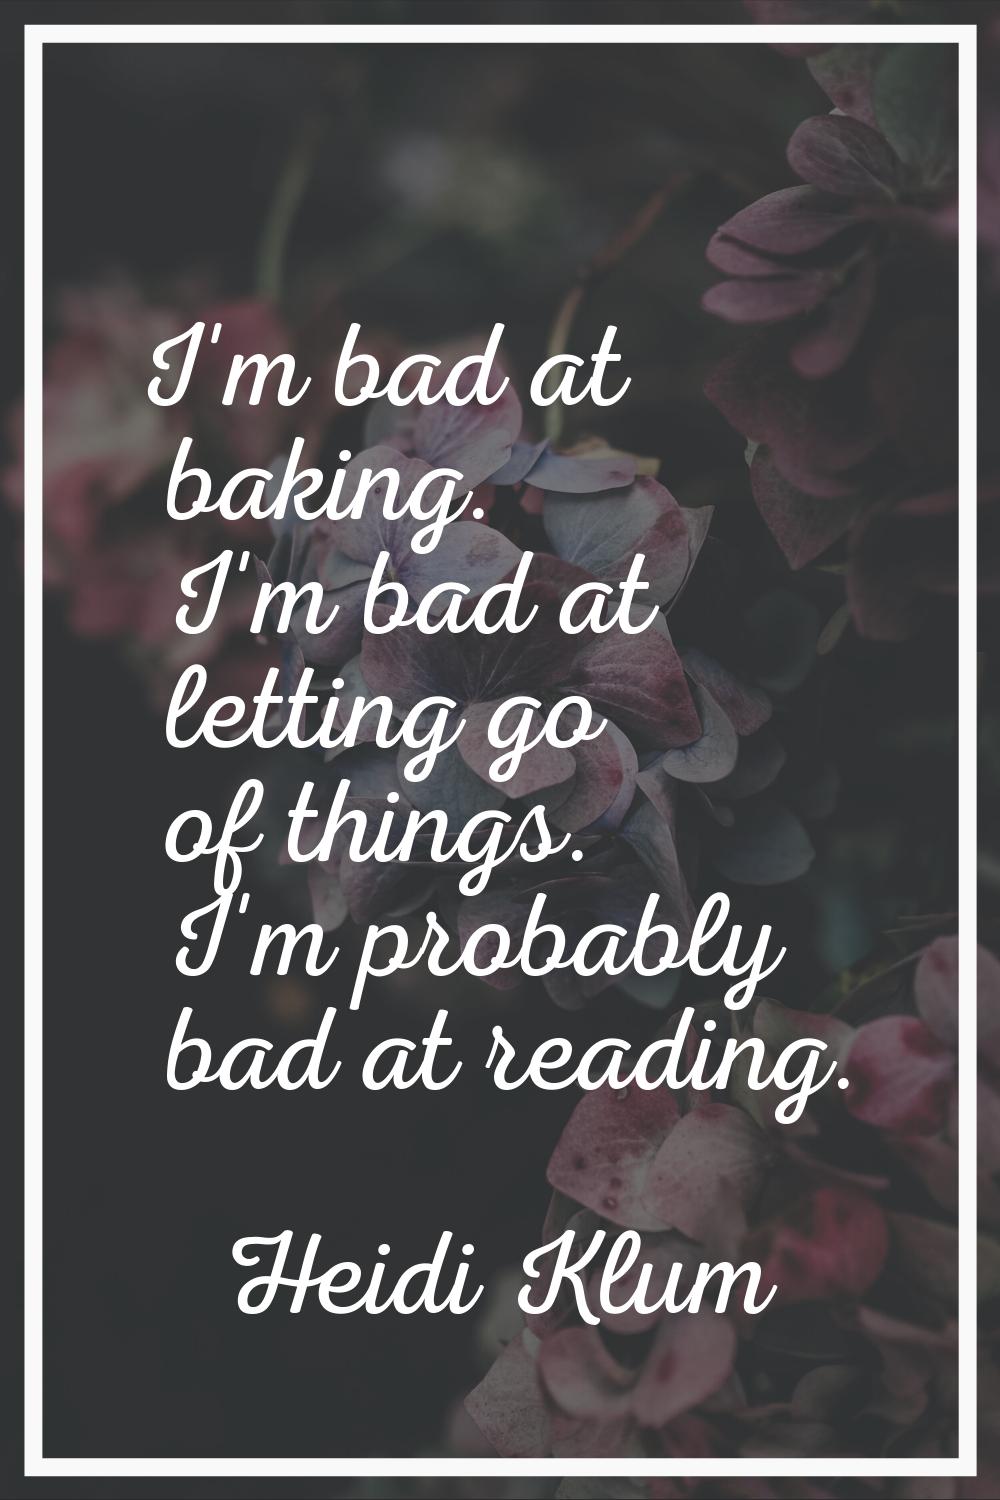 I'm bad at baking. I'm bad at letting go of things. I'm probably bad at reading.